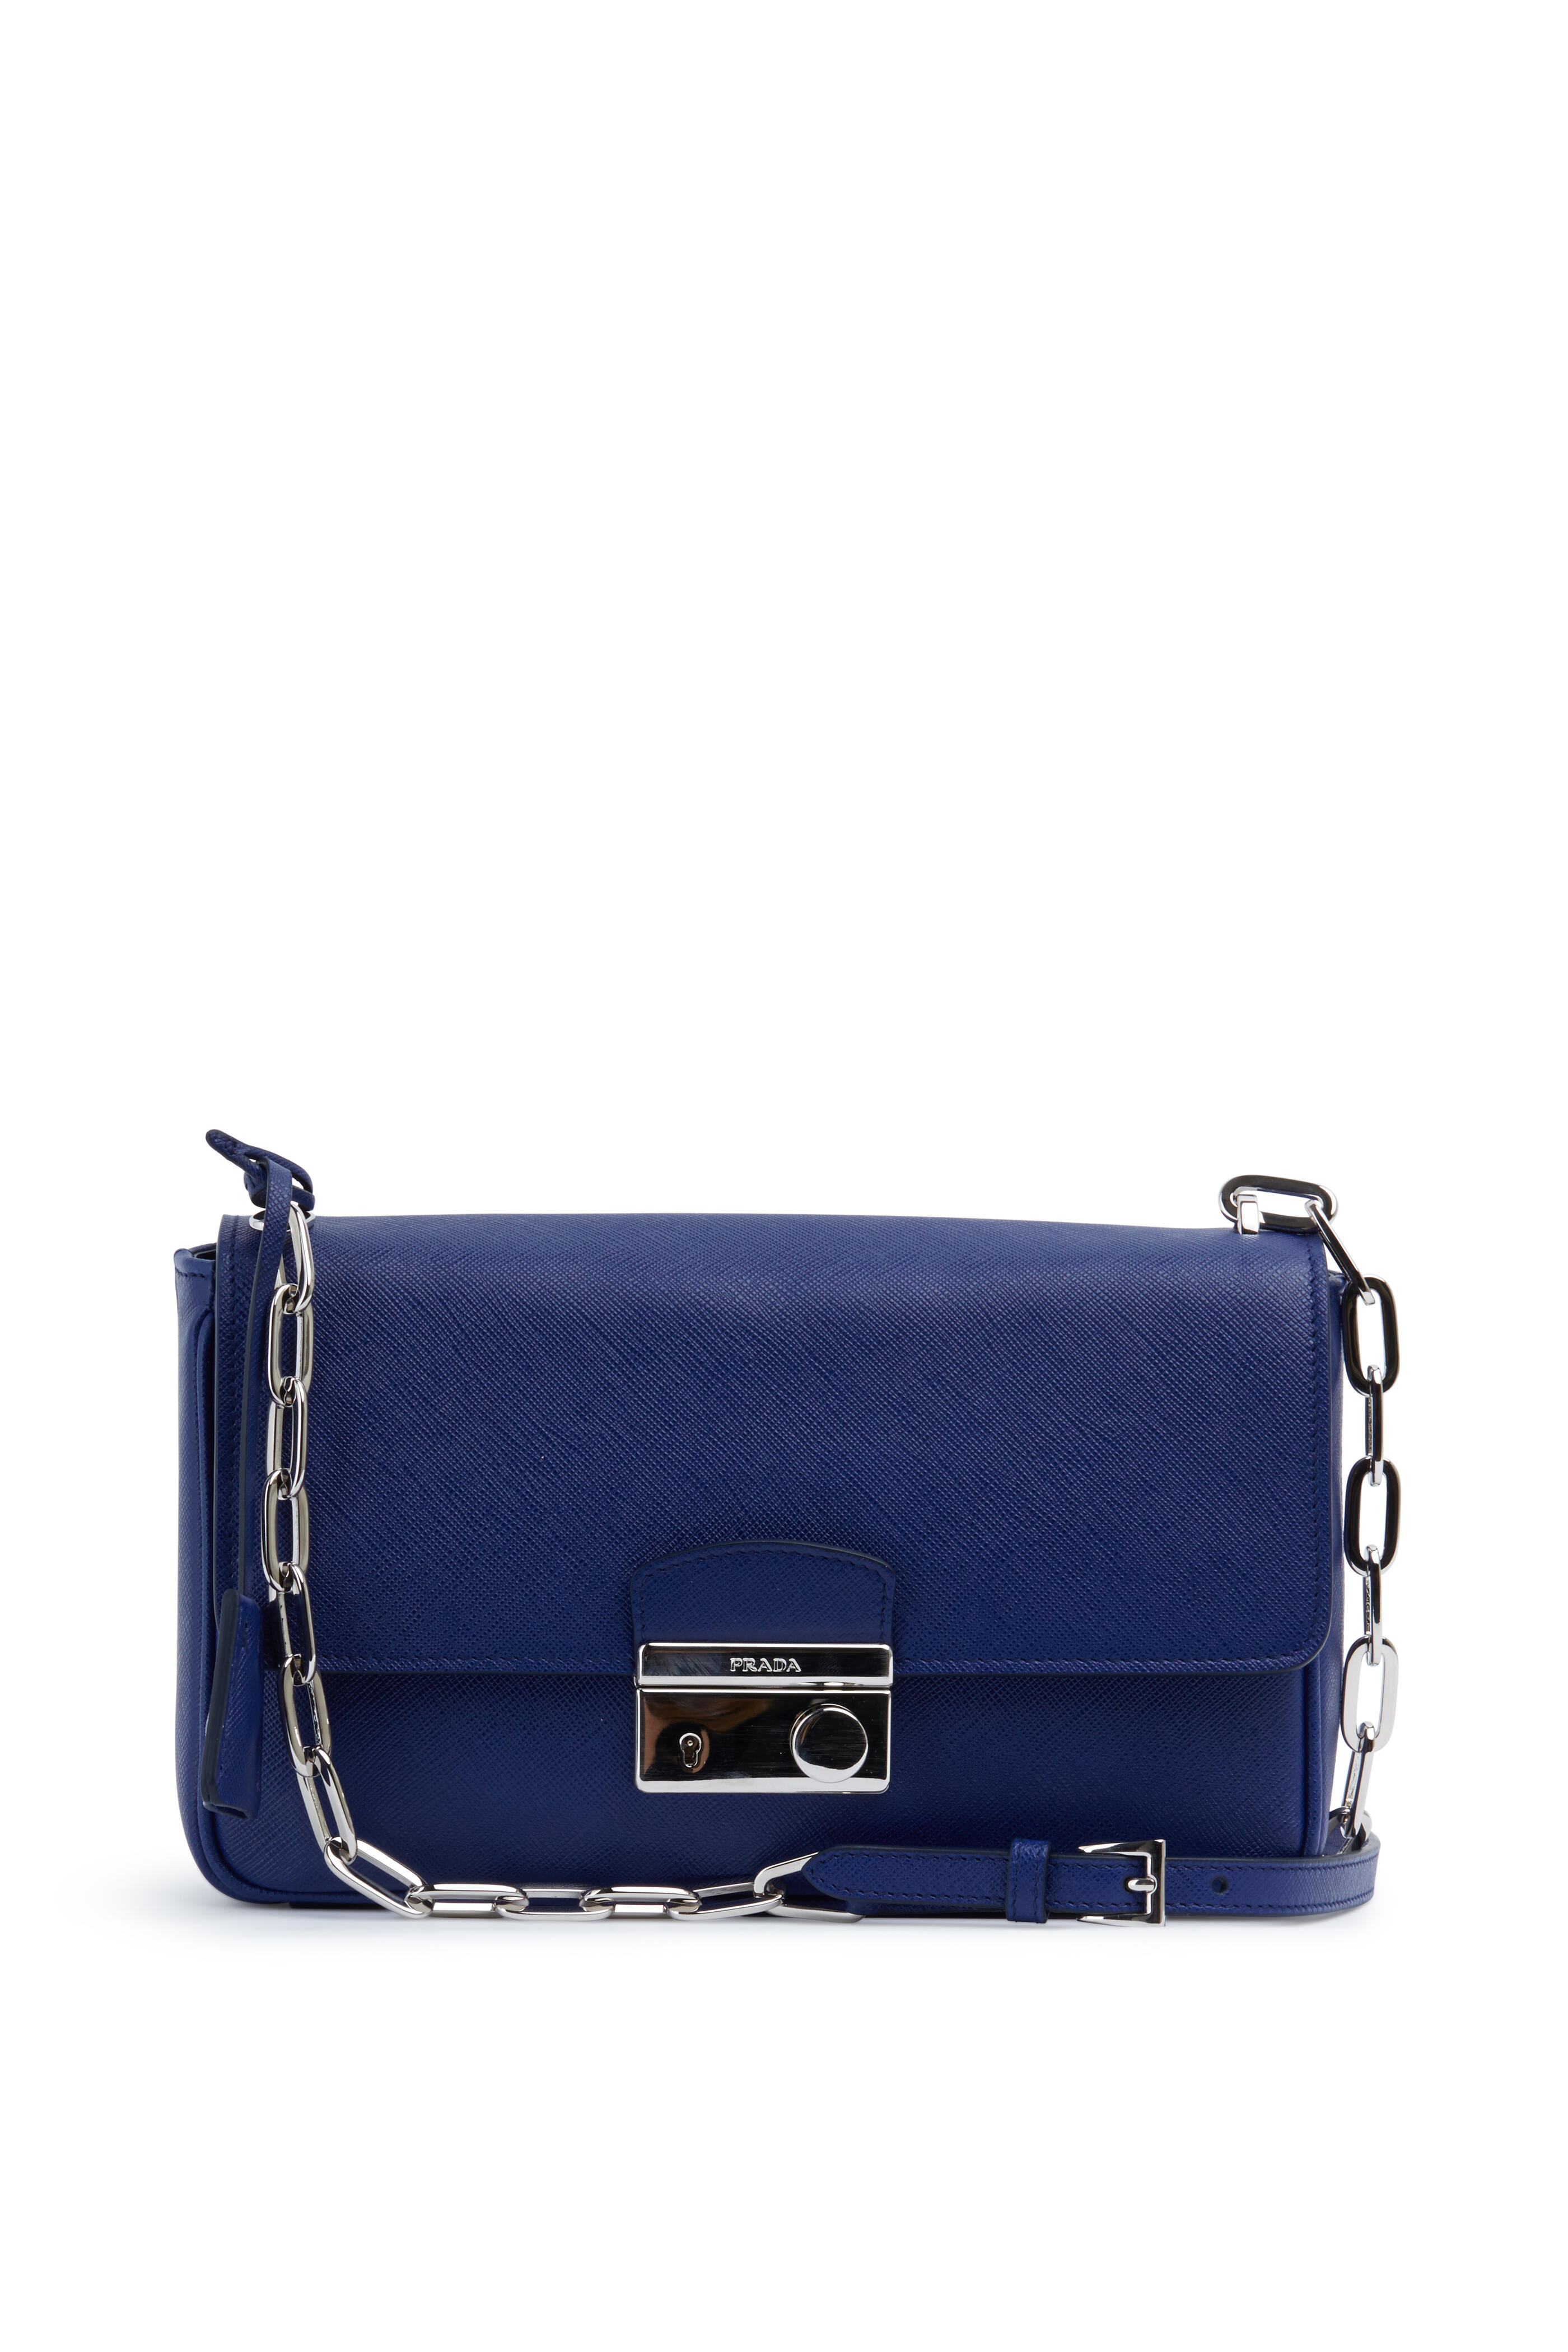 Prada Saffiano Leather Shoulder Bag in Blue